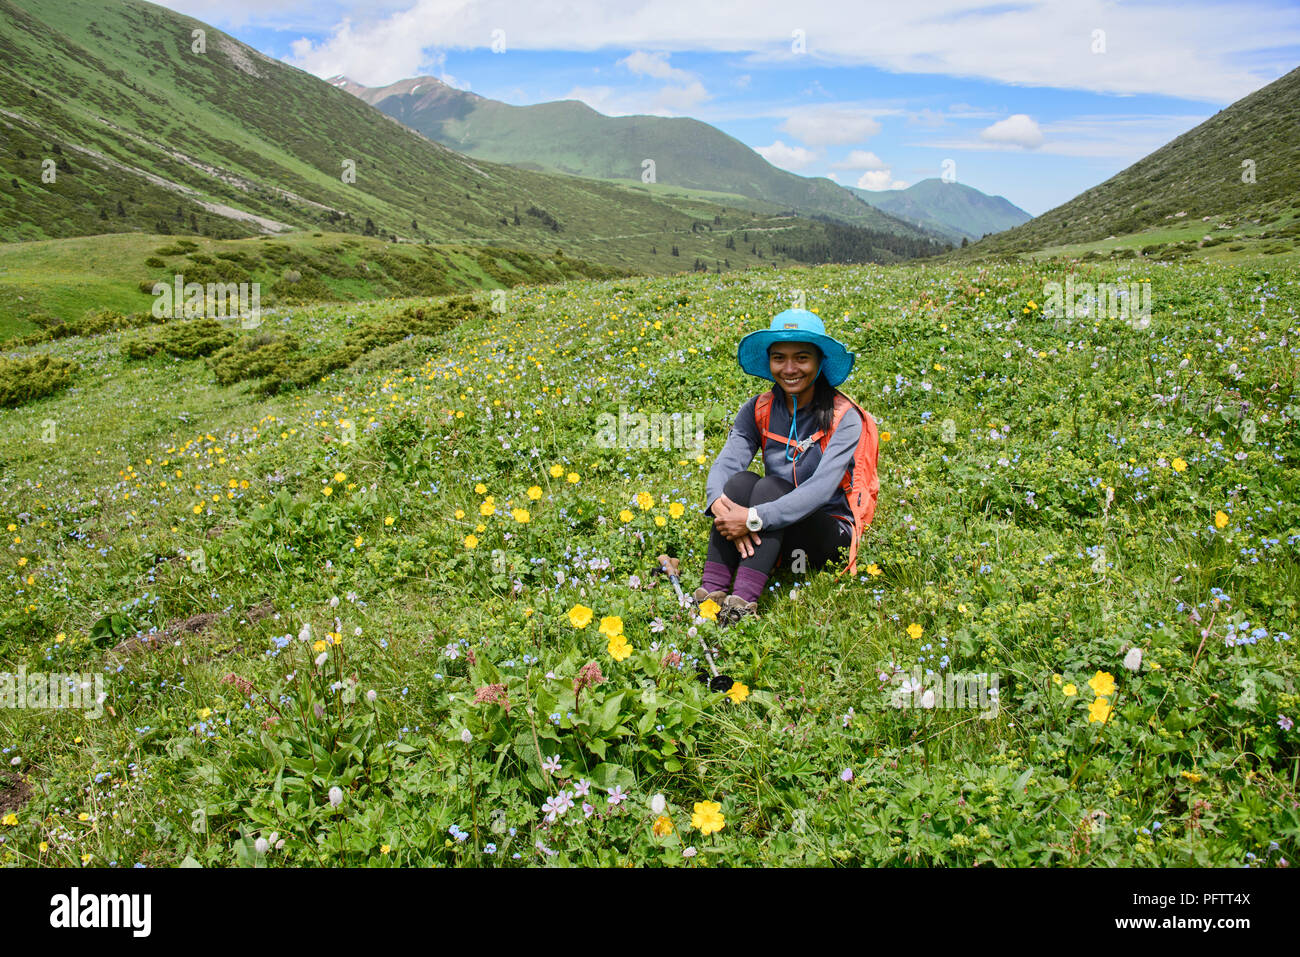 Enjoying the fields of wildflowers on the alpine Keskenkija Trek, Jyrgalan, Kyrgyzstan Stock Photo